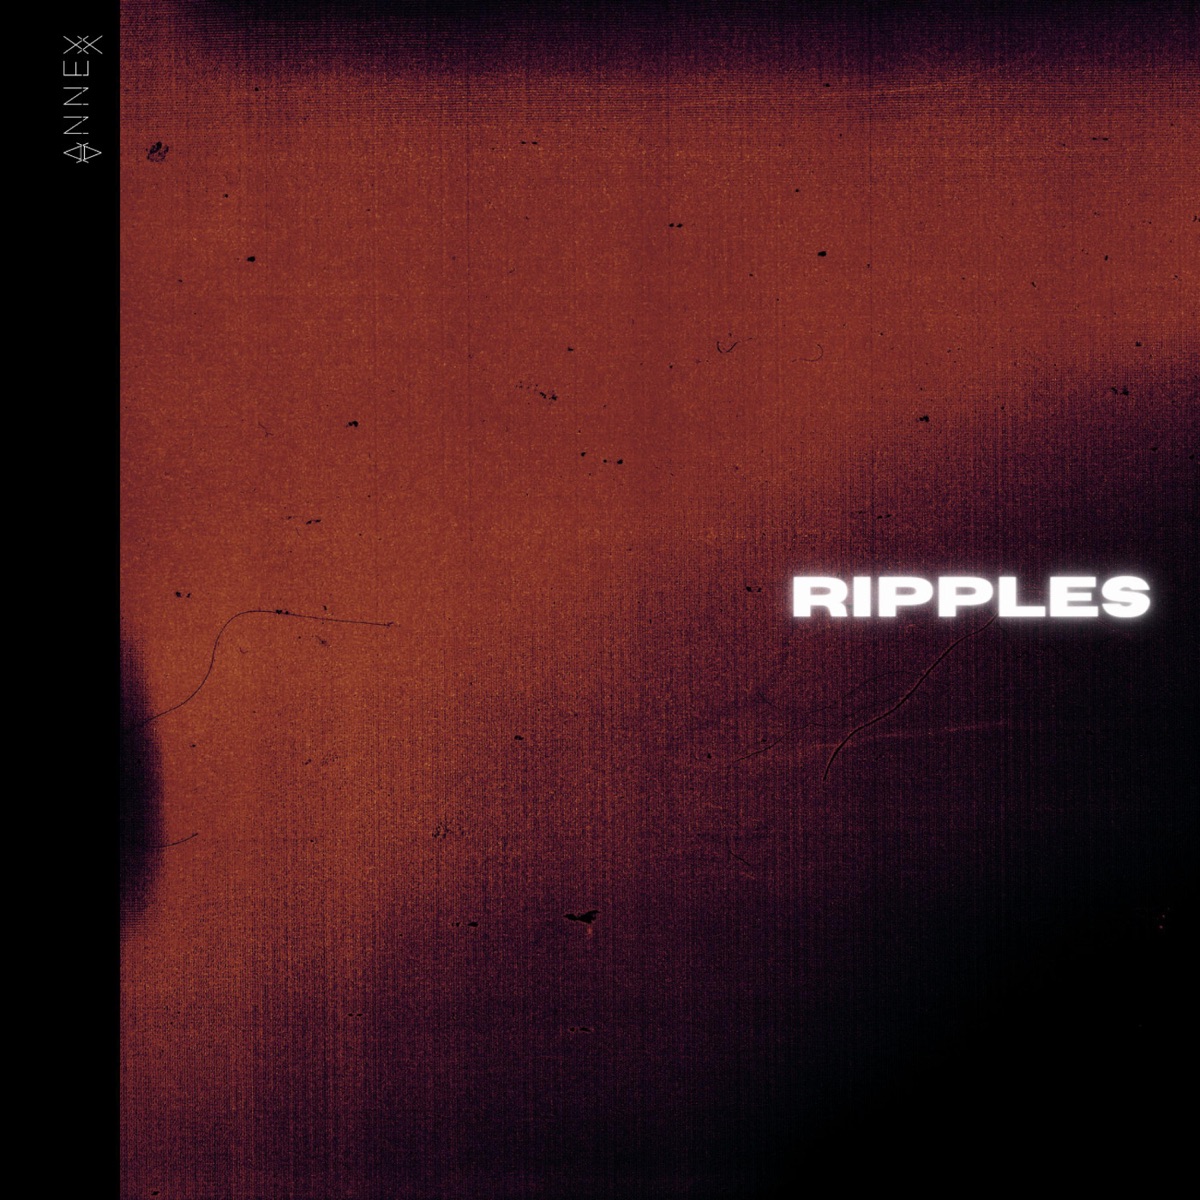 ANNEX VOID - Ripples cover 